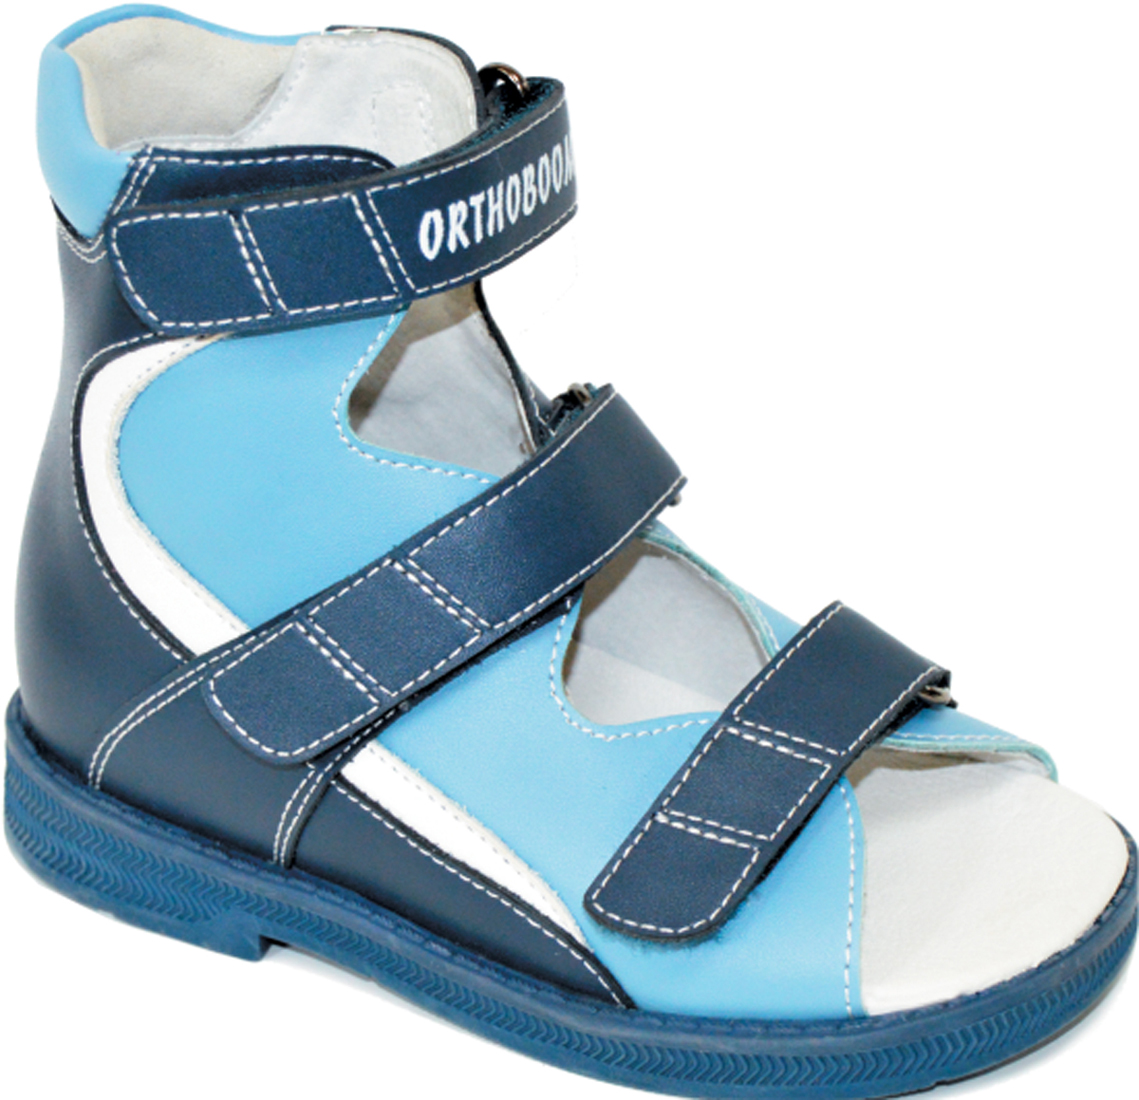 Сандалии для мальчика Orthoboom, цвет: темно-синий-голубой-белый. 71597-33. Размер 27